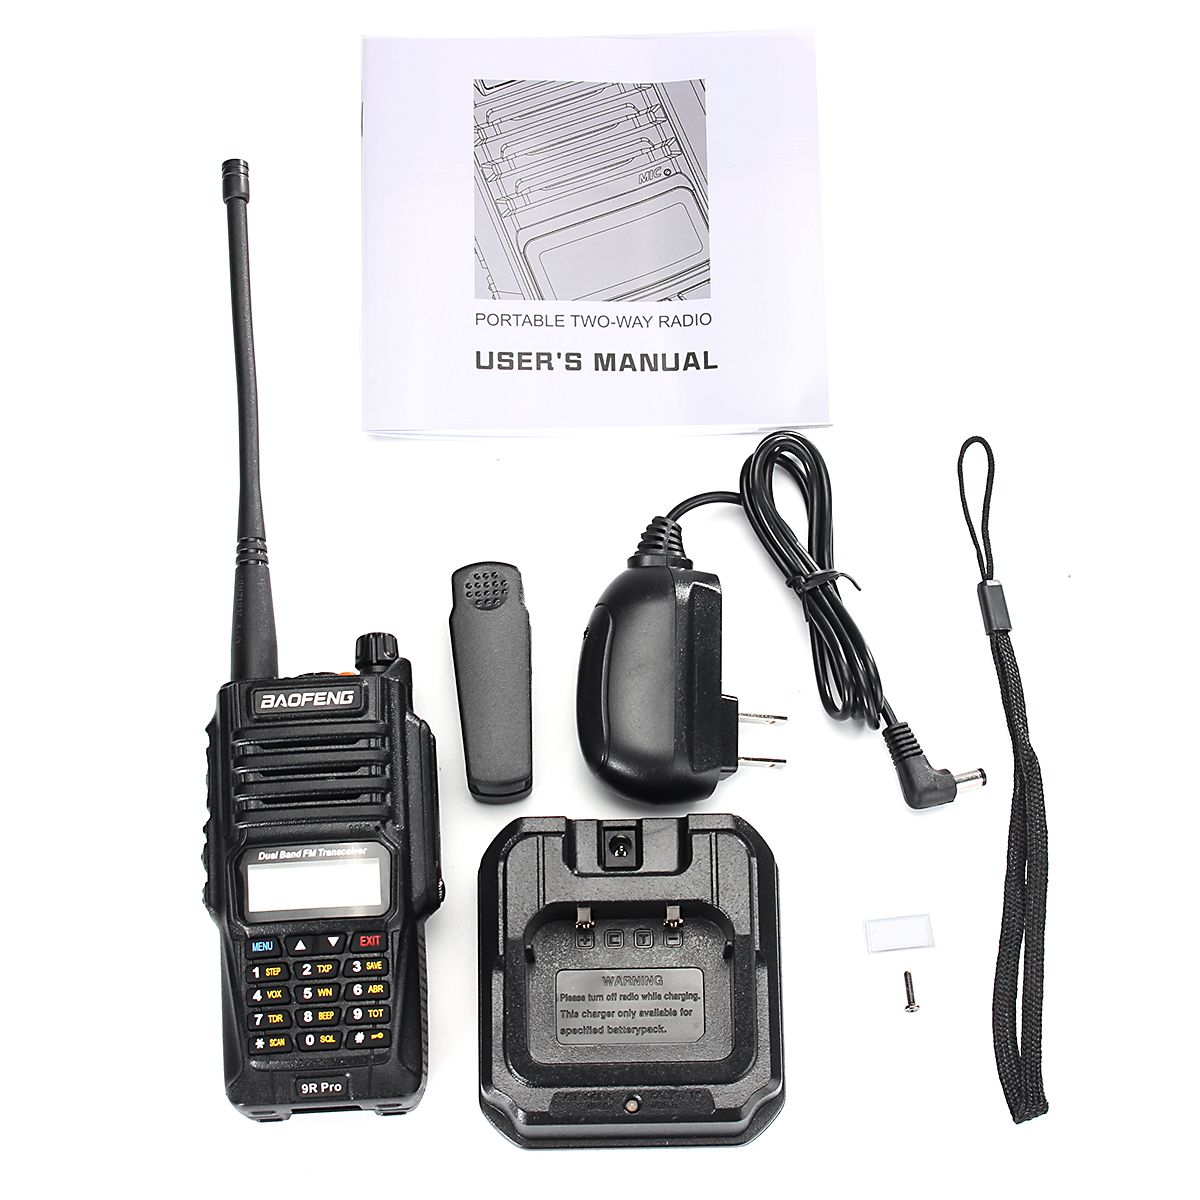 BAOFENG-UV-9R-Pro-15W-8800-mAh-FM-Transceiver-Waterproof-Dual-Band-Handheld-Radio-Walkie-Talkie-1643229